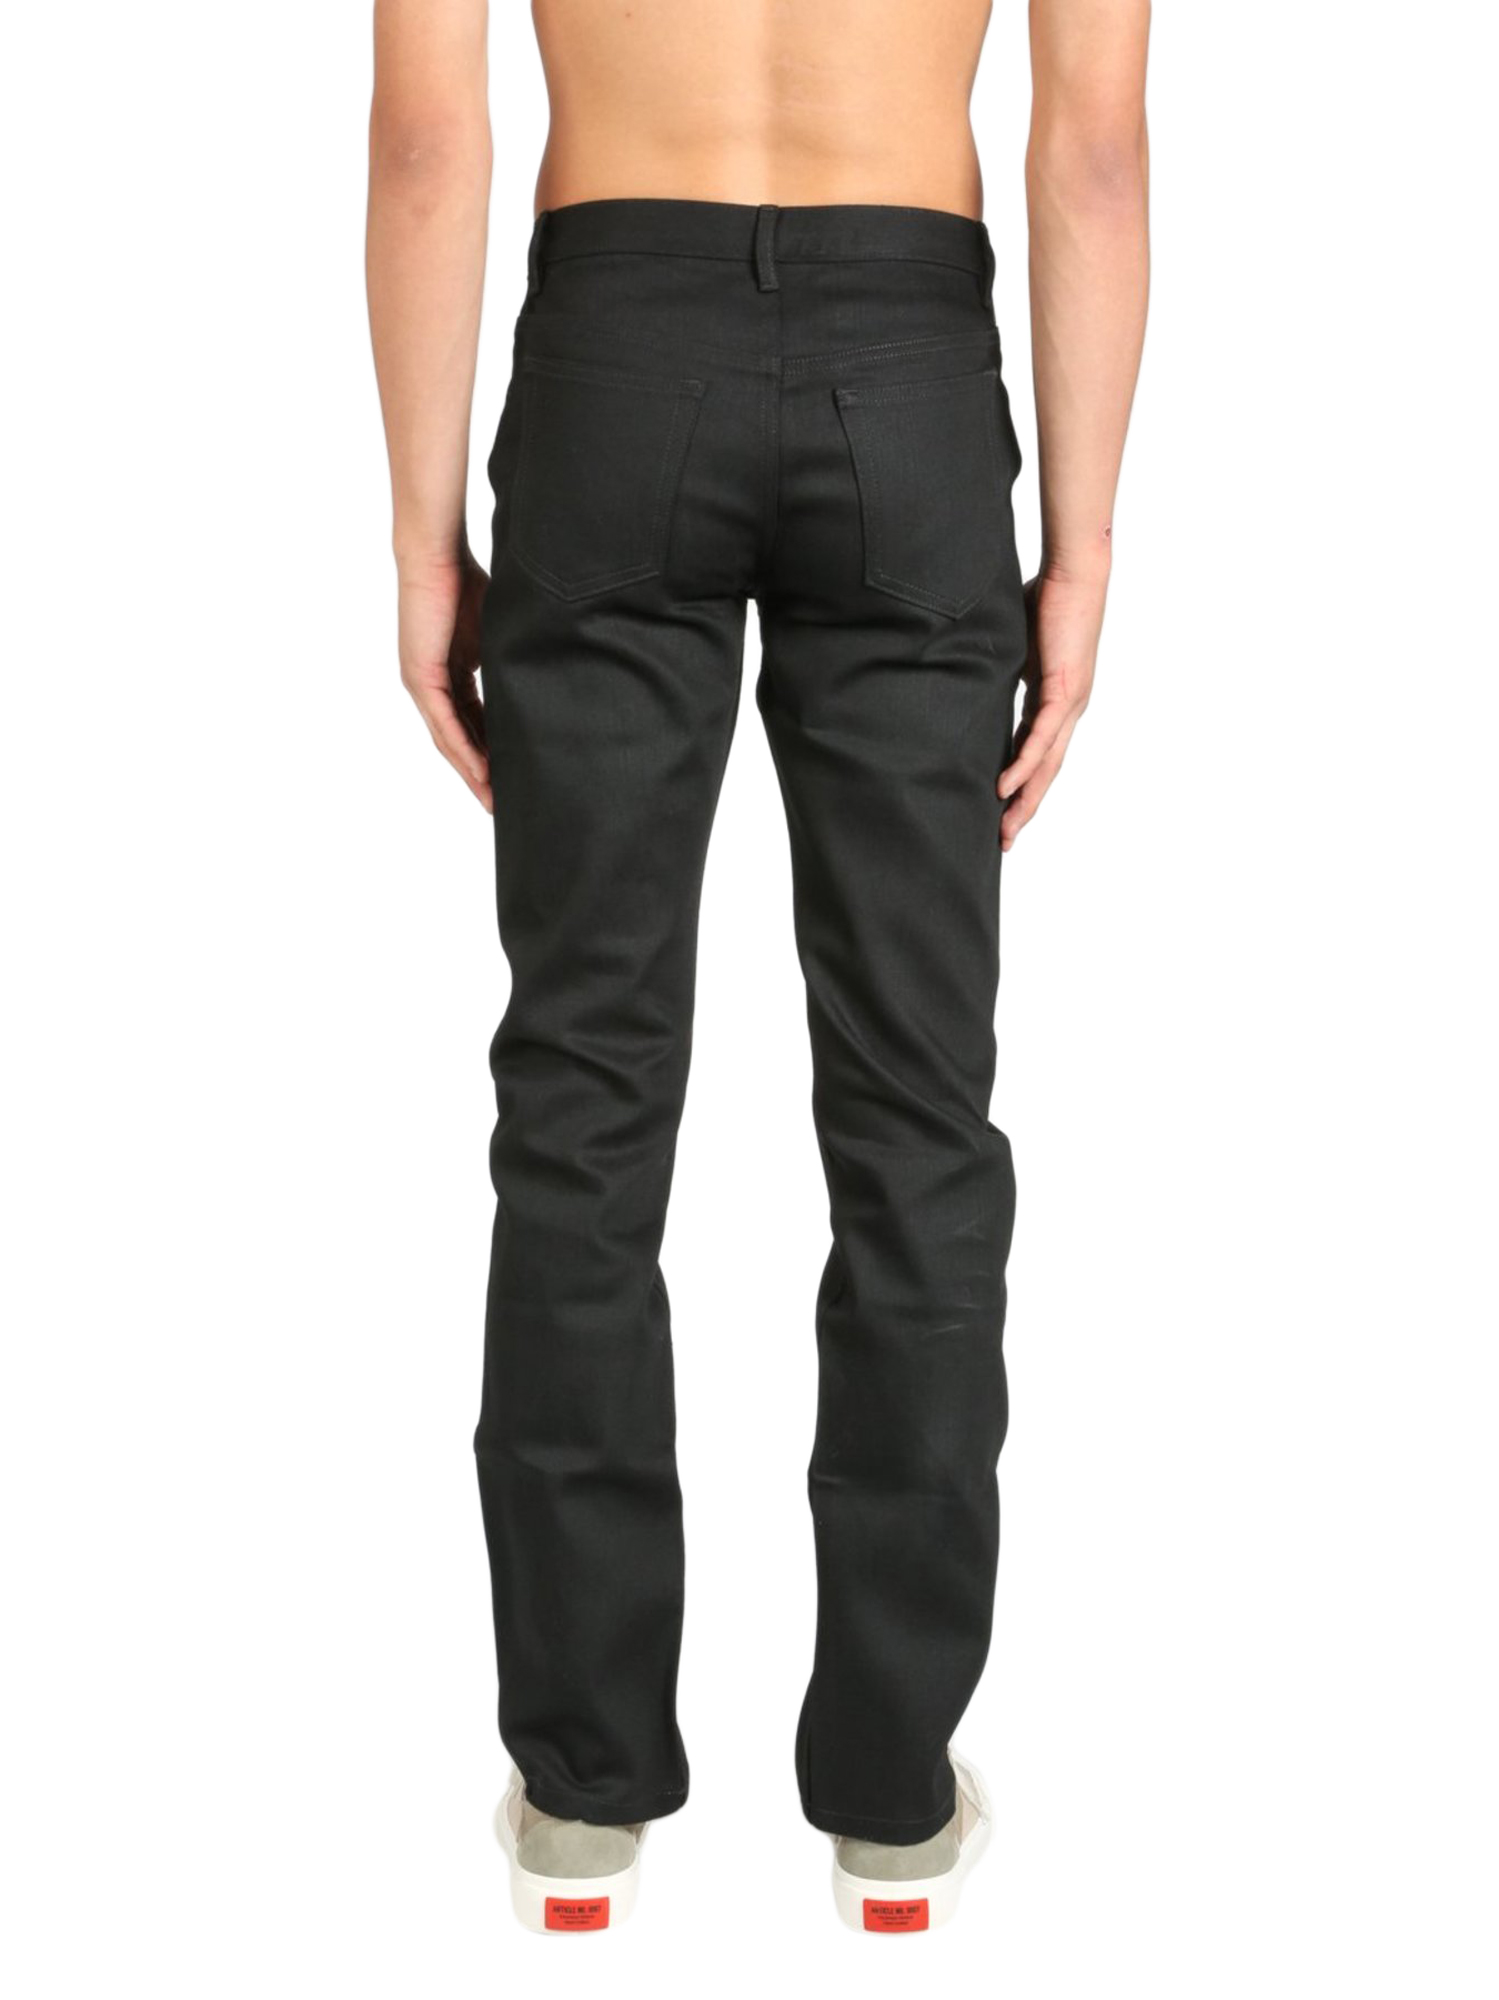 A.P.C. Unisex Black New Standard Denim Jeans Sz 24 $210 NWT